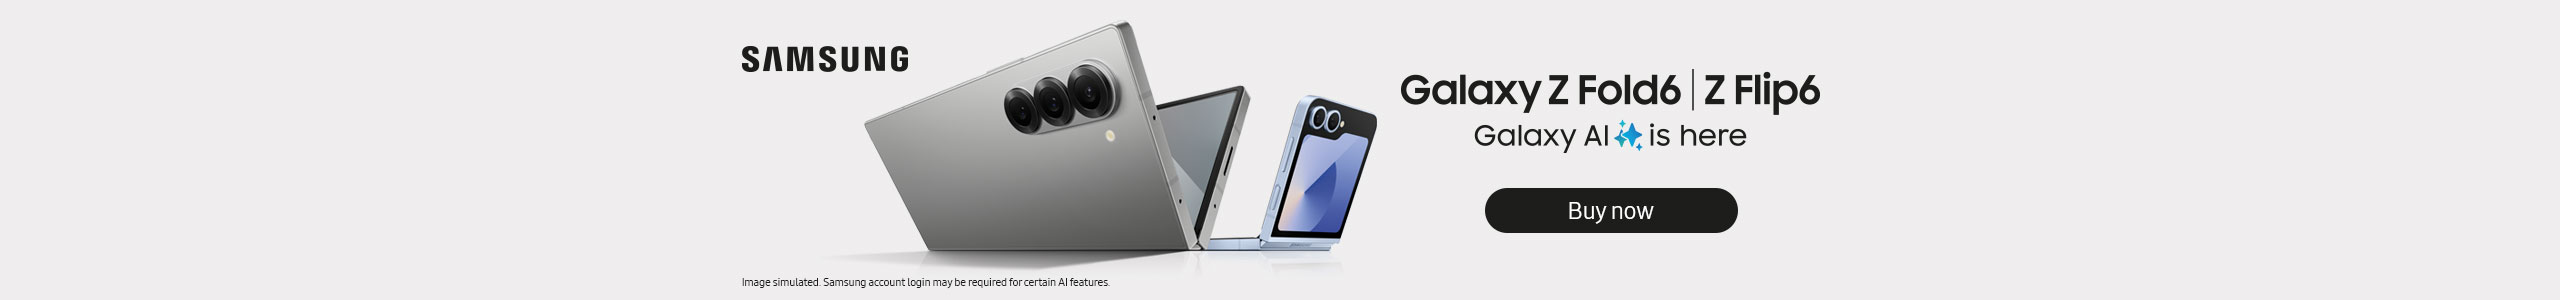 Samsung-Galaxy-Flip-Fold-6-Banner